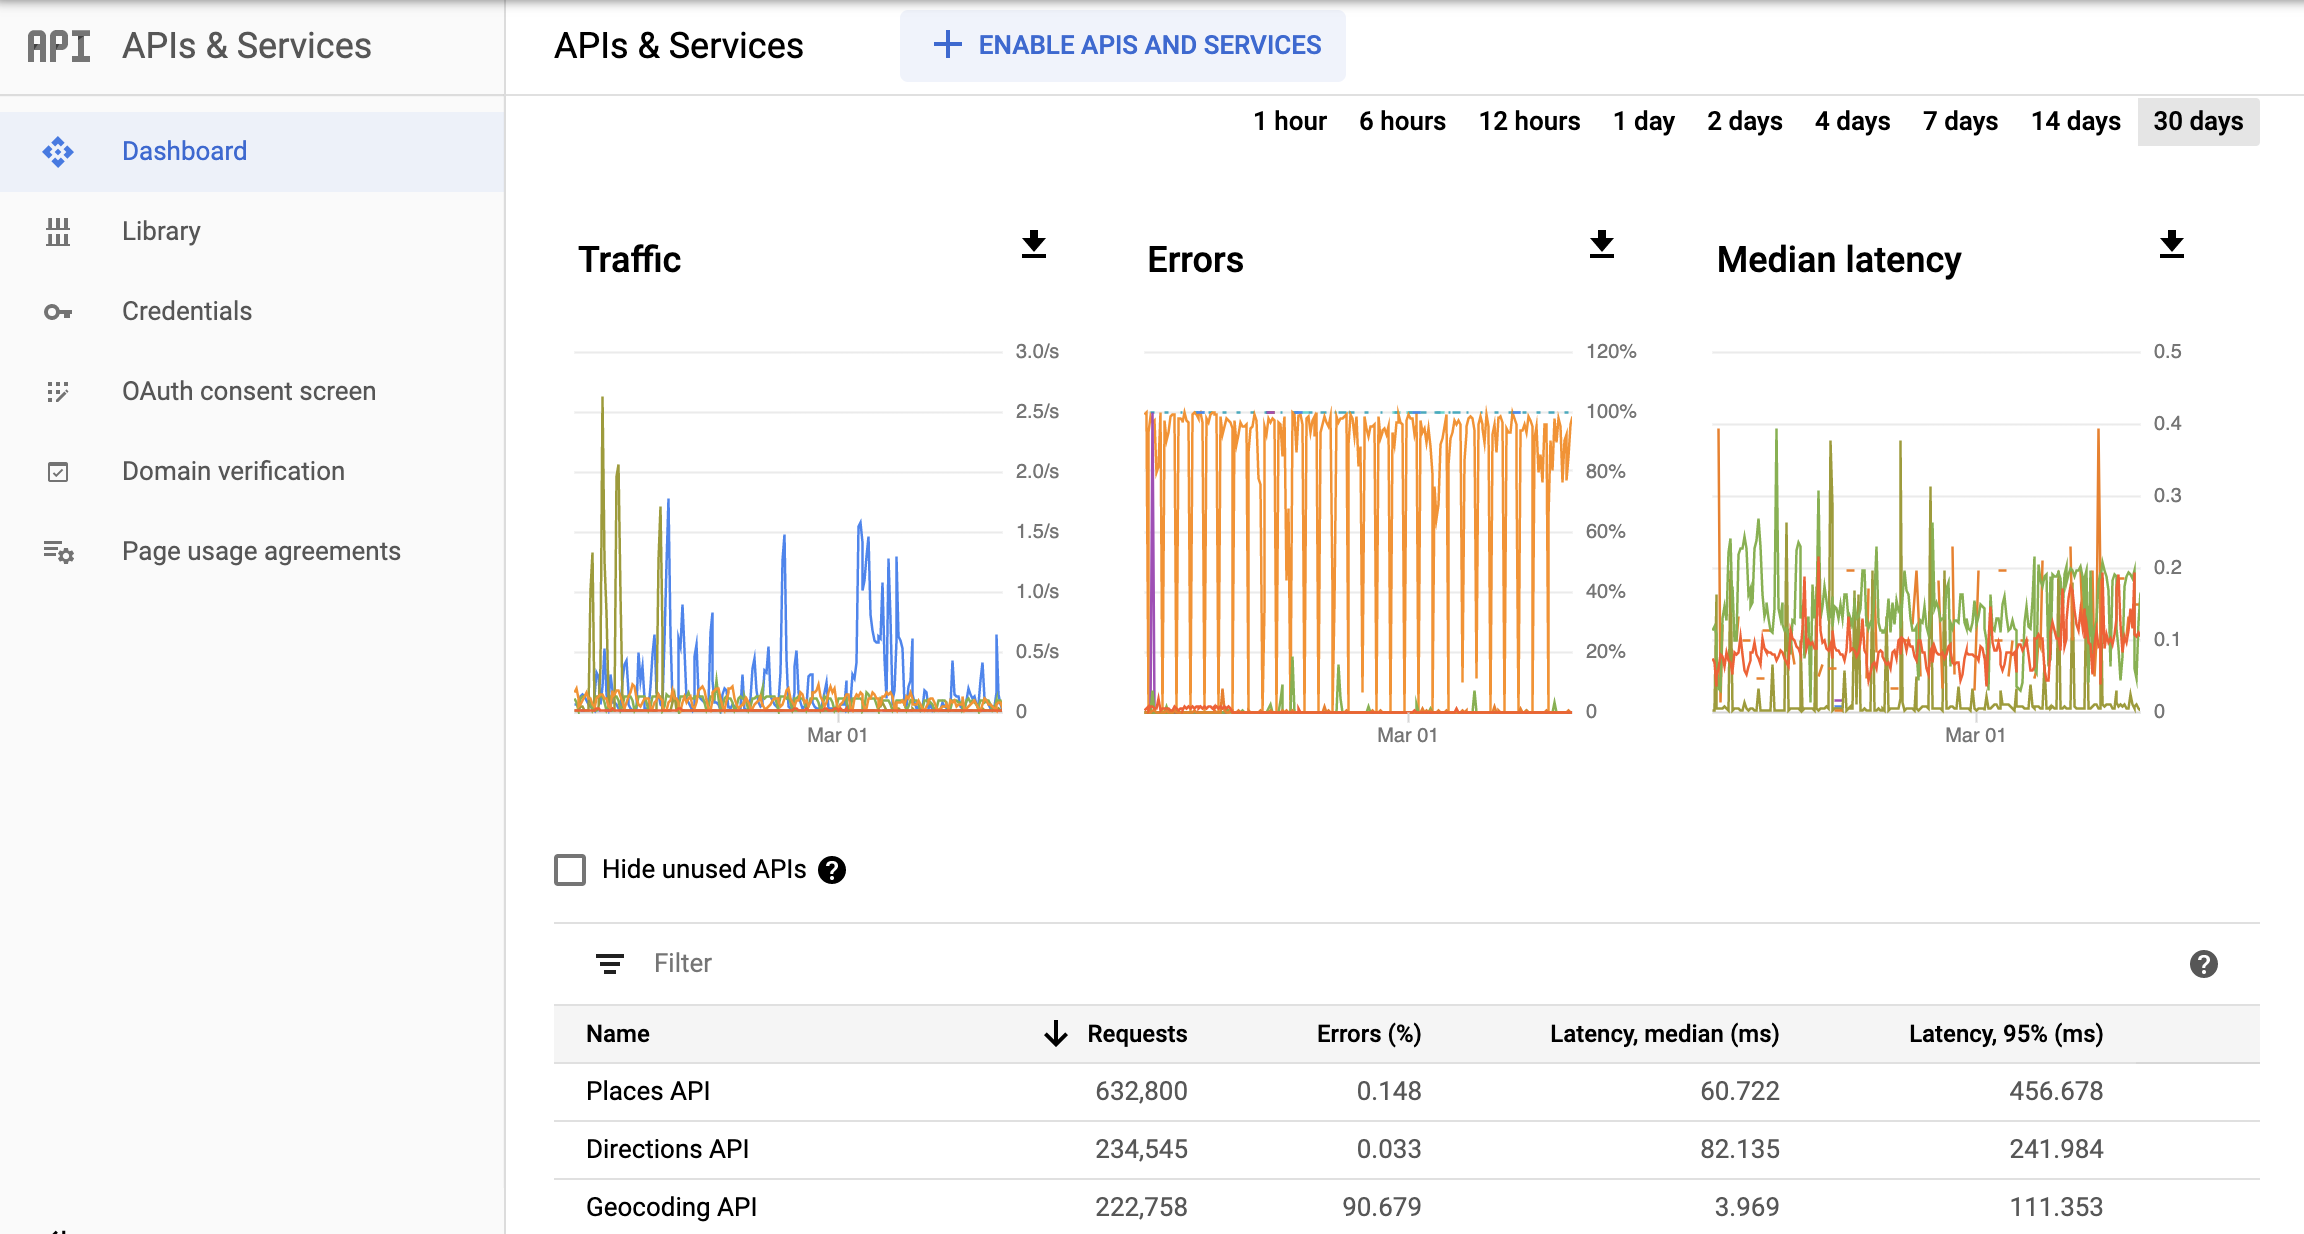 Google Cloud 控制台中 Monitoring API 頁面的螢幕截圖，顯示「API 和服務」報表資訊主頁，以及「流量」、「錯誤」和「延遲時間中位數」各自的圖表。這些圖表可顯示 1 小時至 30 天的資料。